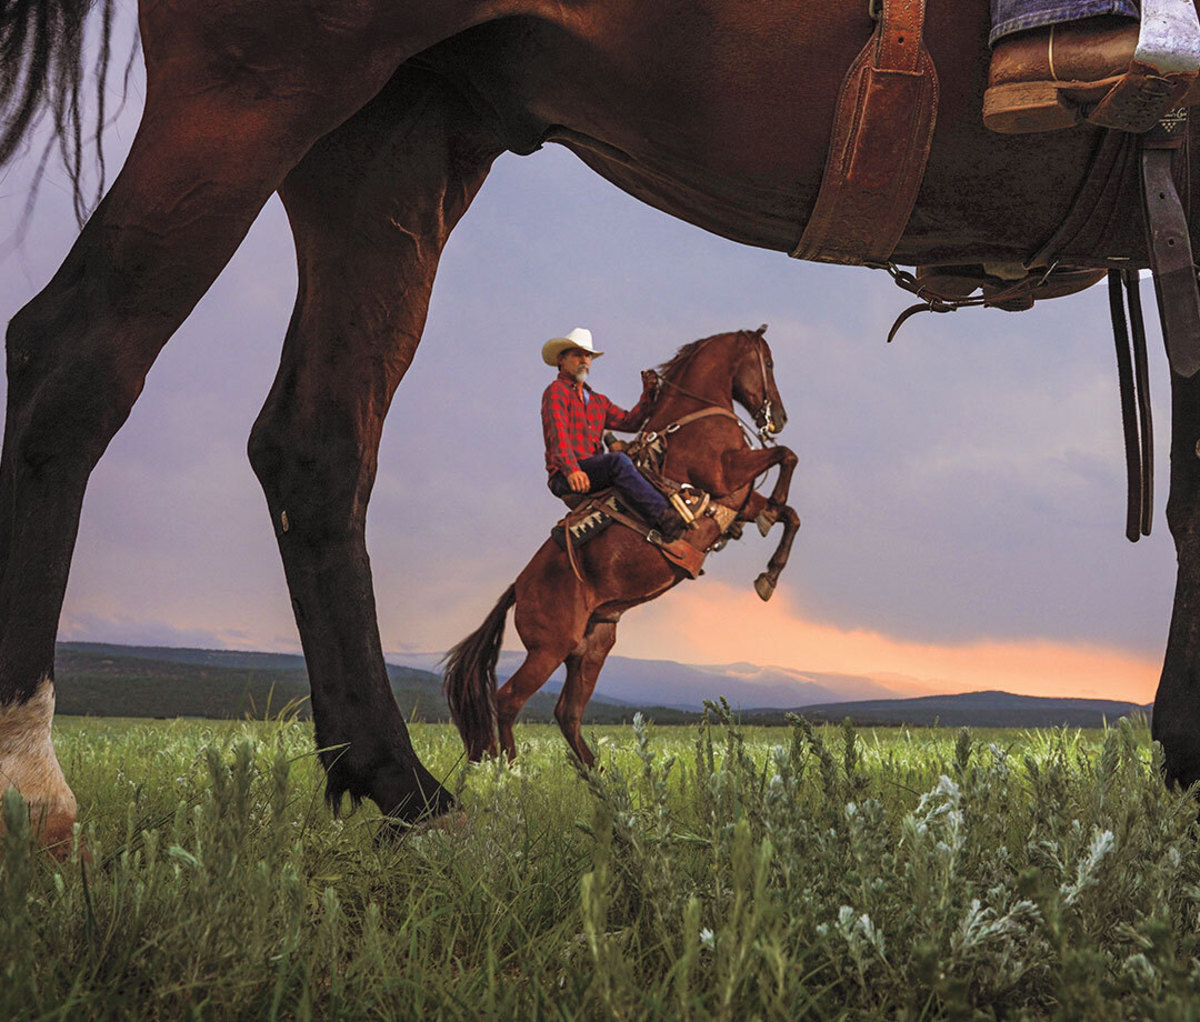 Actor Josh Brolin on bucking horse